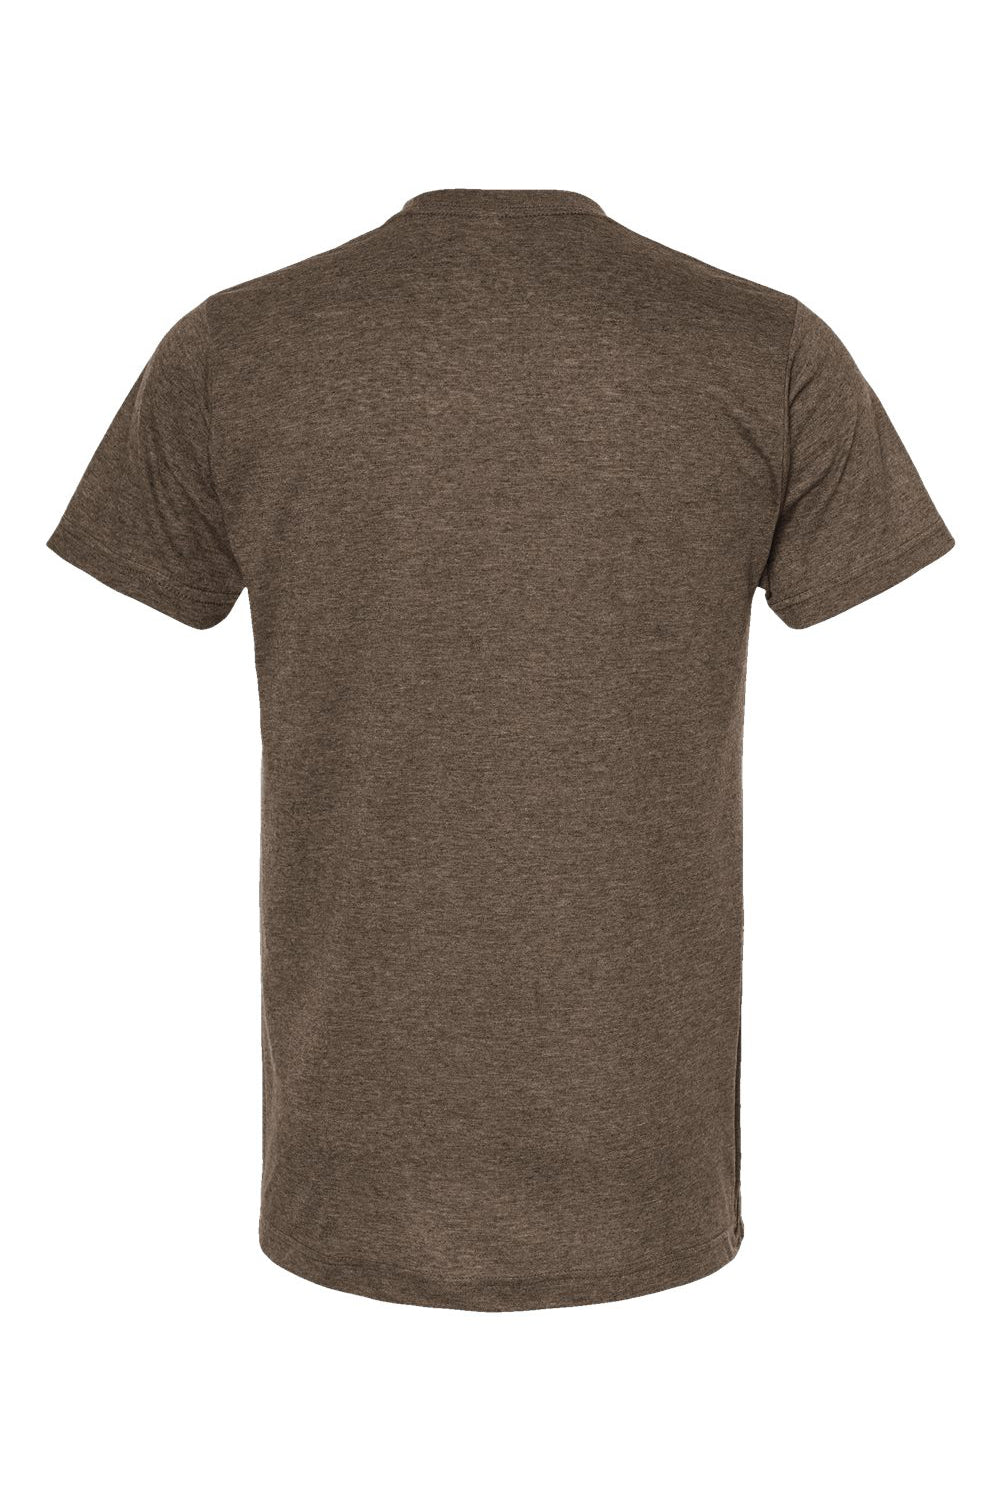 Tultex 241 Mens Poly-Rich Short Sleeve Crewneck T-Shirt Heather Brown Flat Back